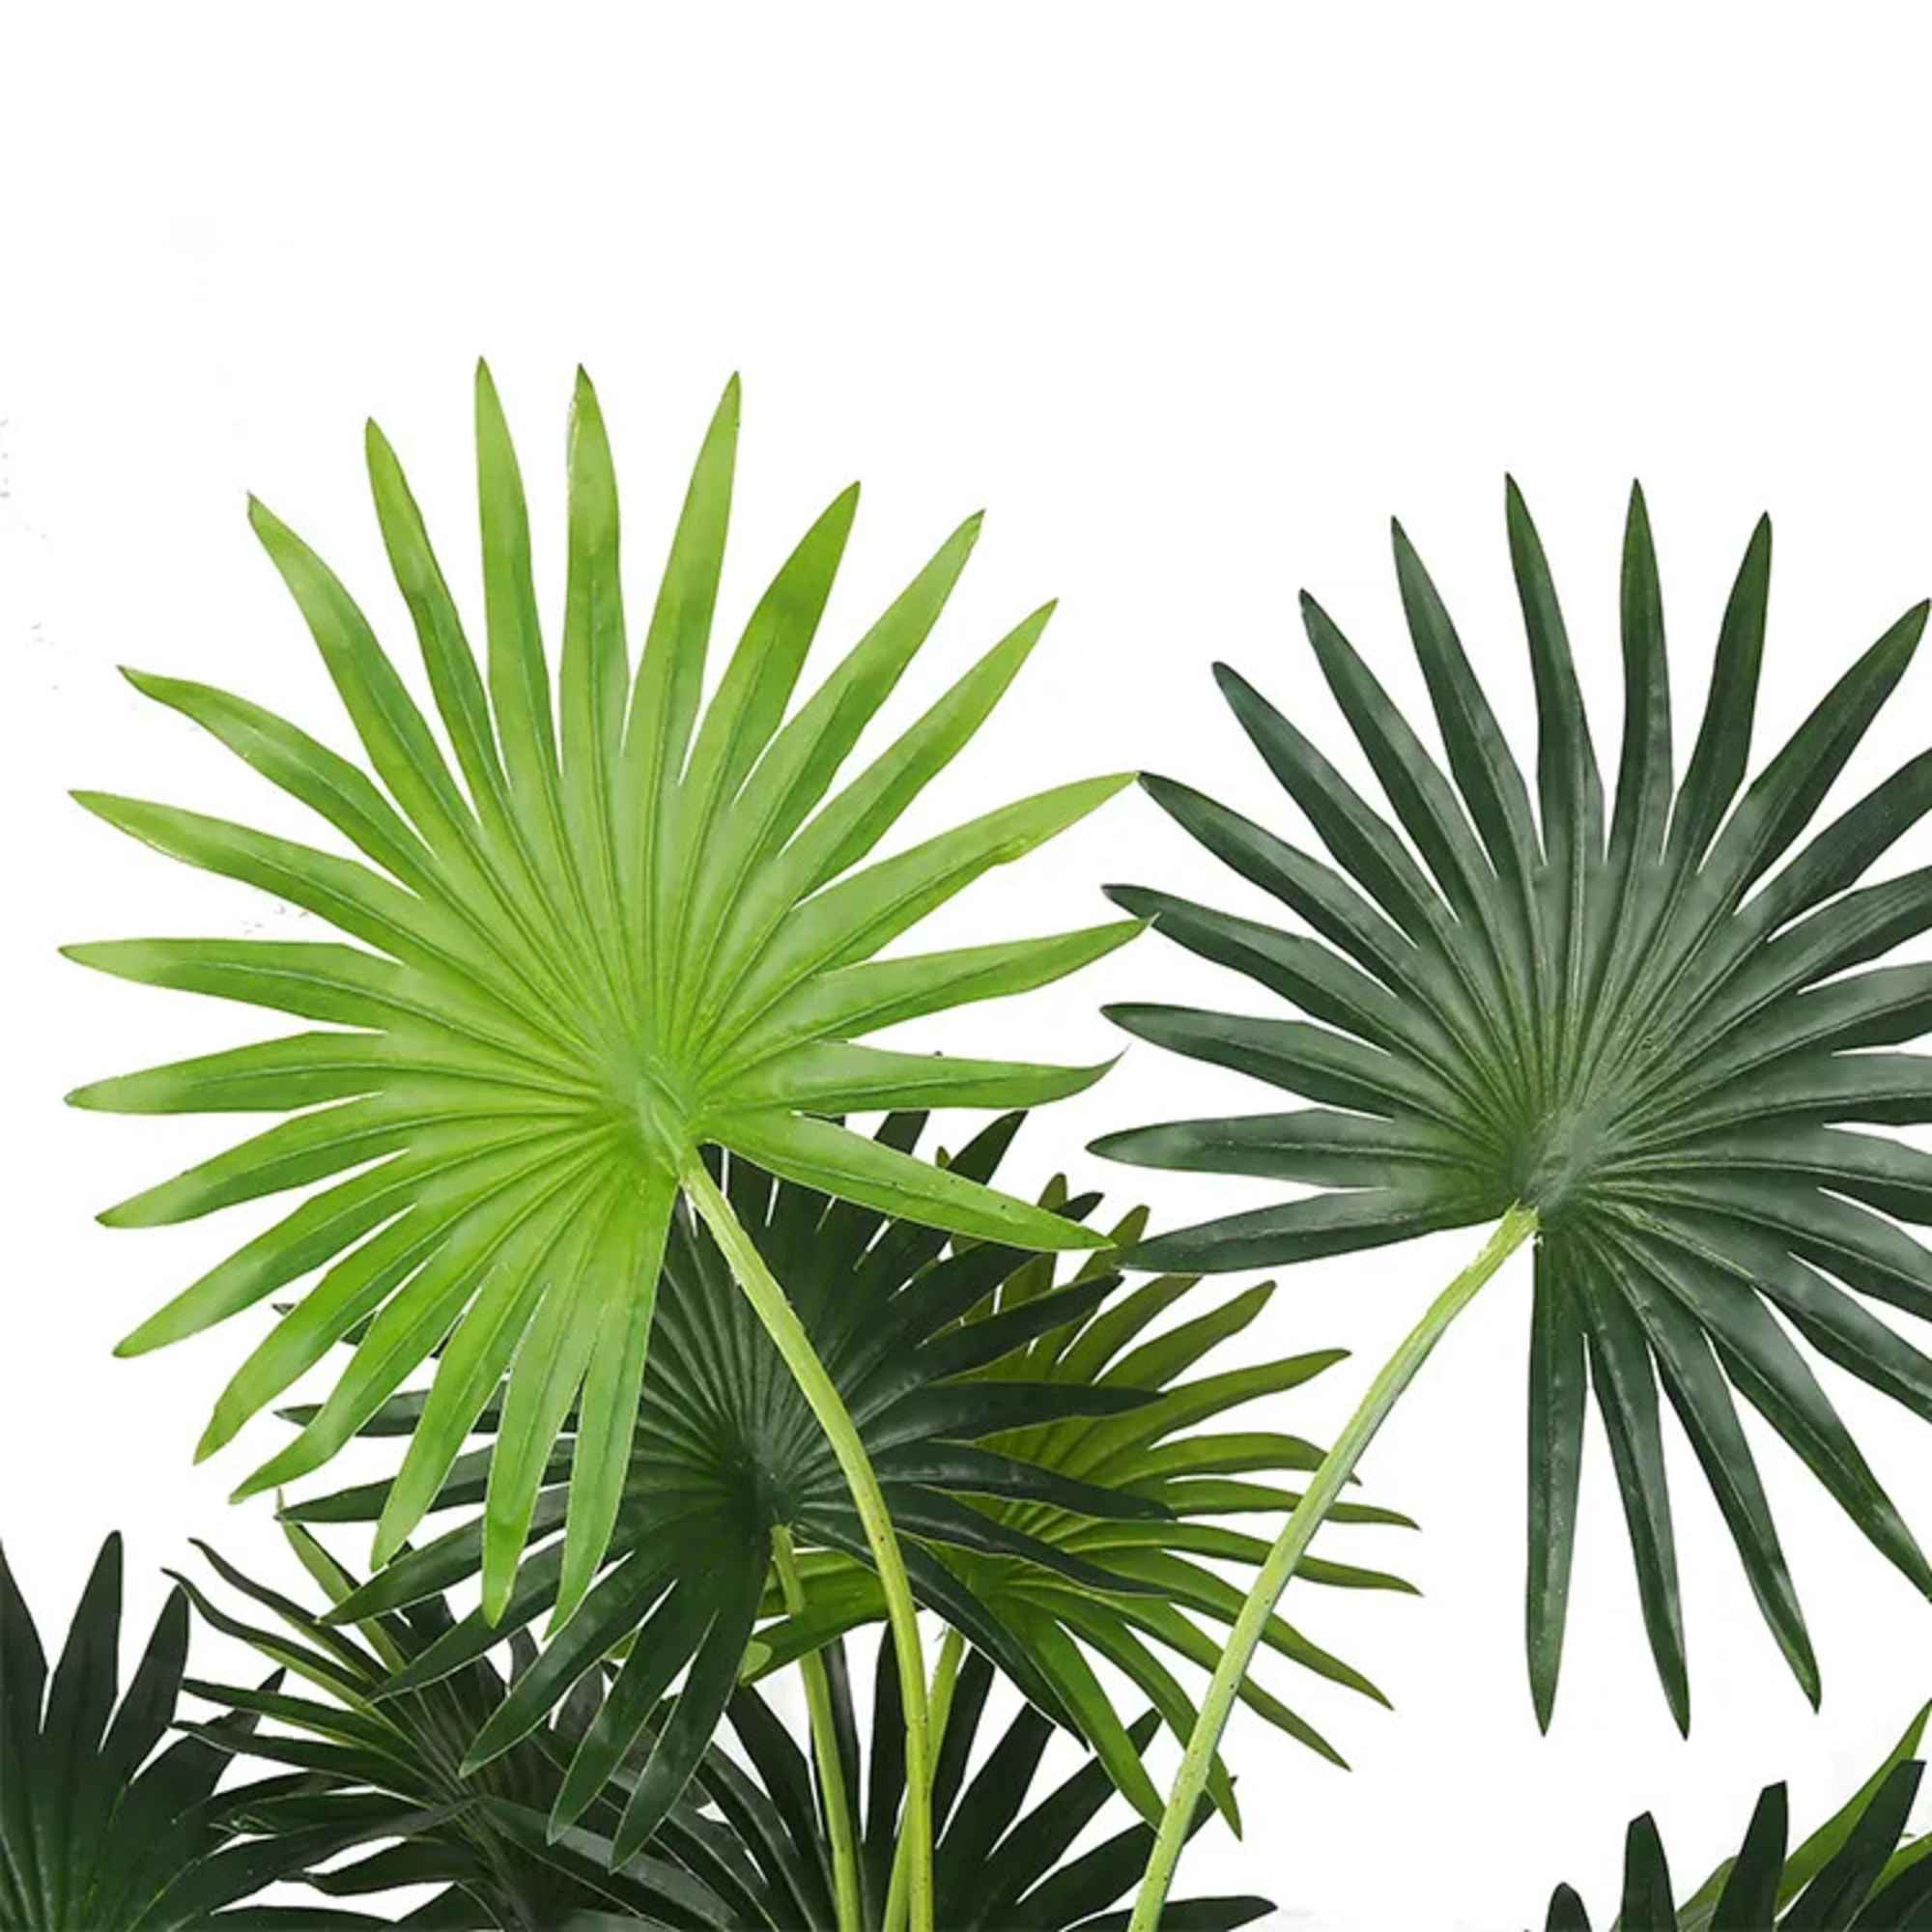 Artificial Palm Plants Plastic Fan Palm Tree